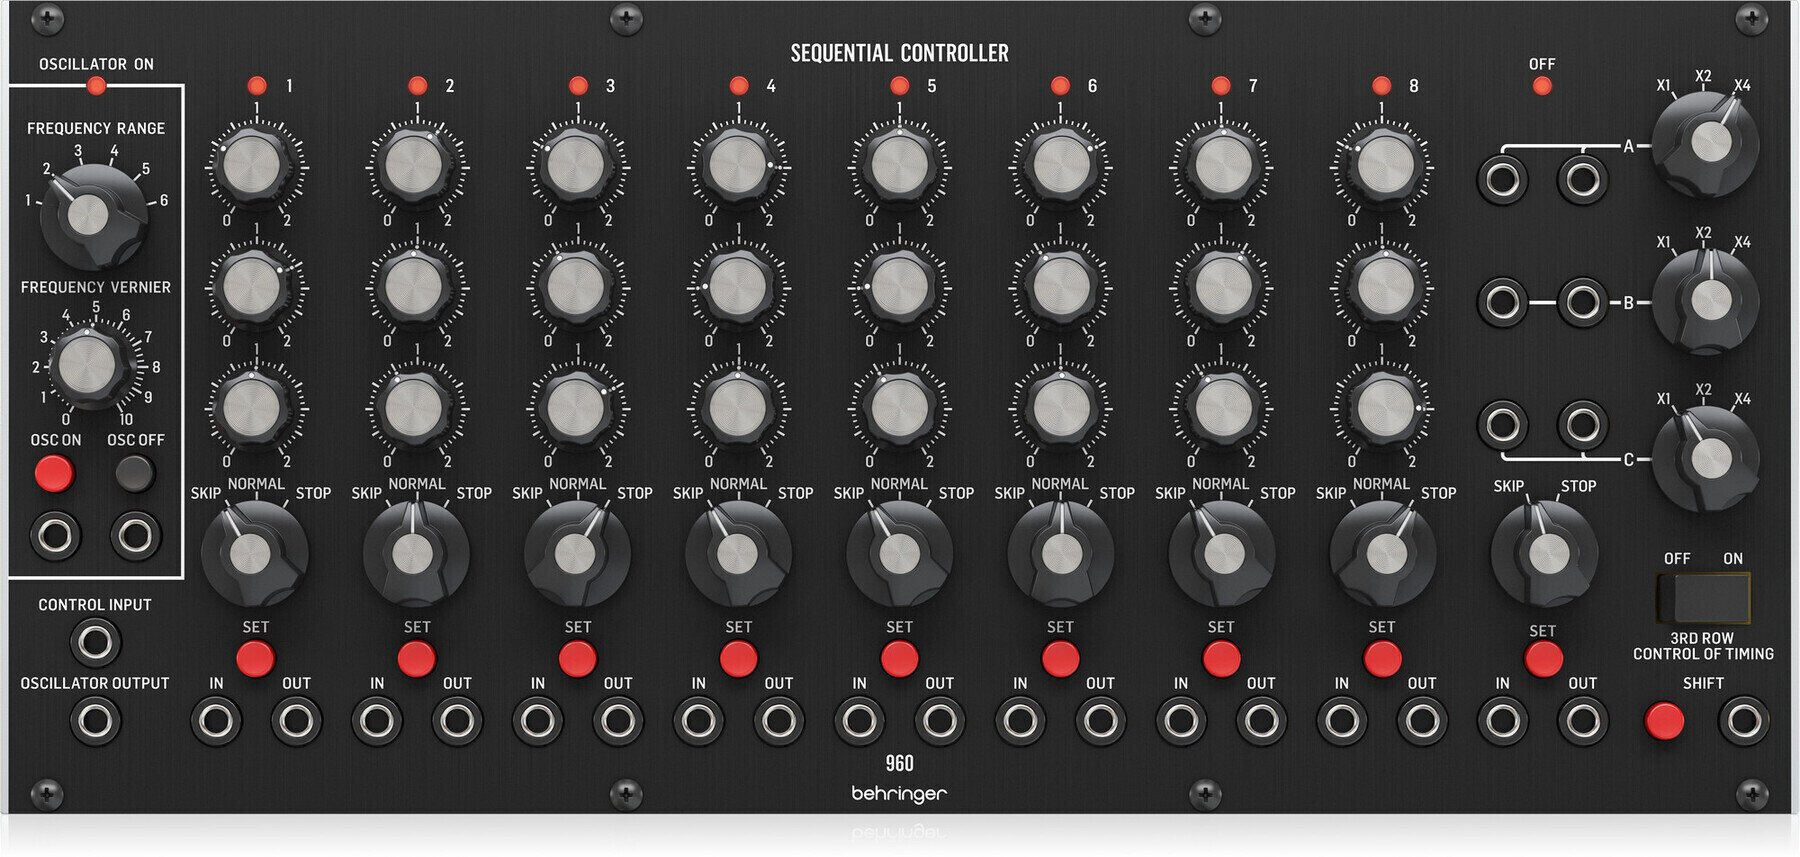 Modulárny systém Behringer 960 Sequential Controller